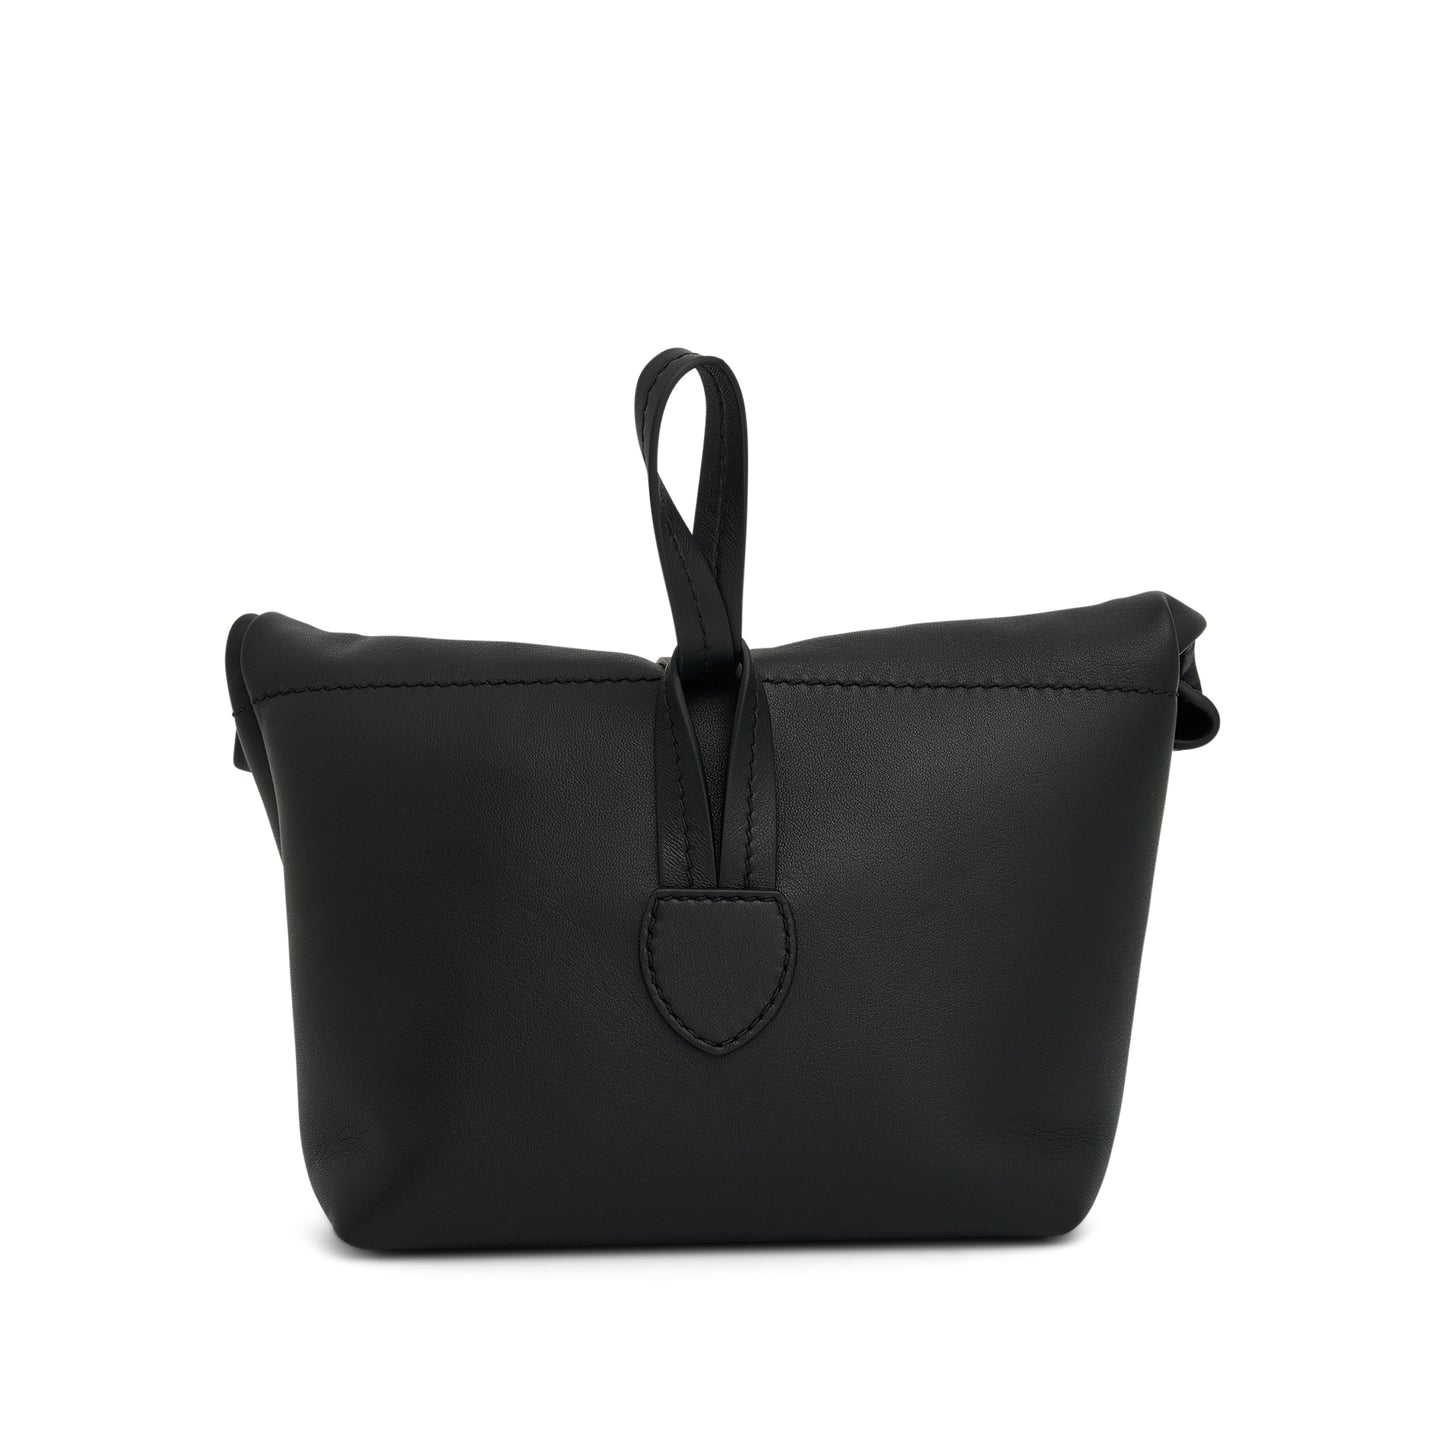 Leather Clutch Bag in Black